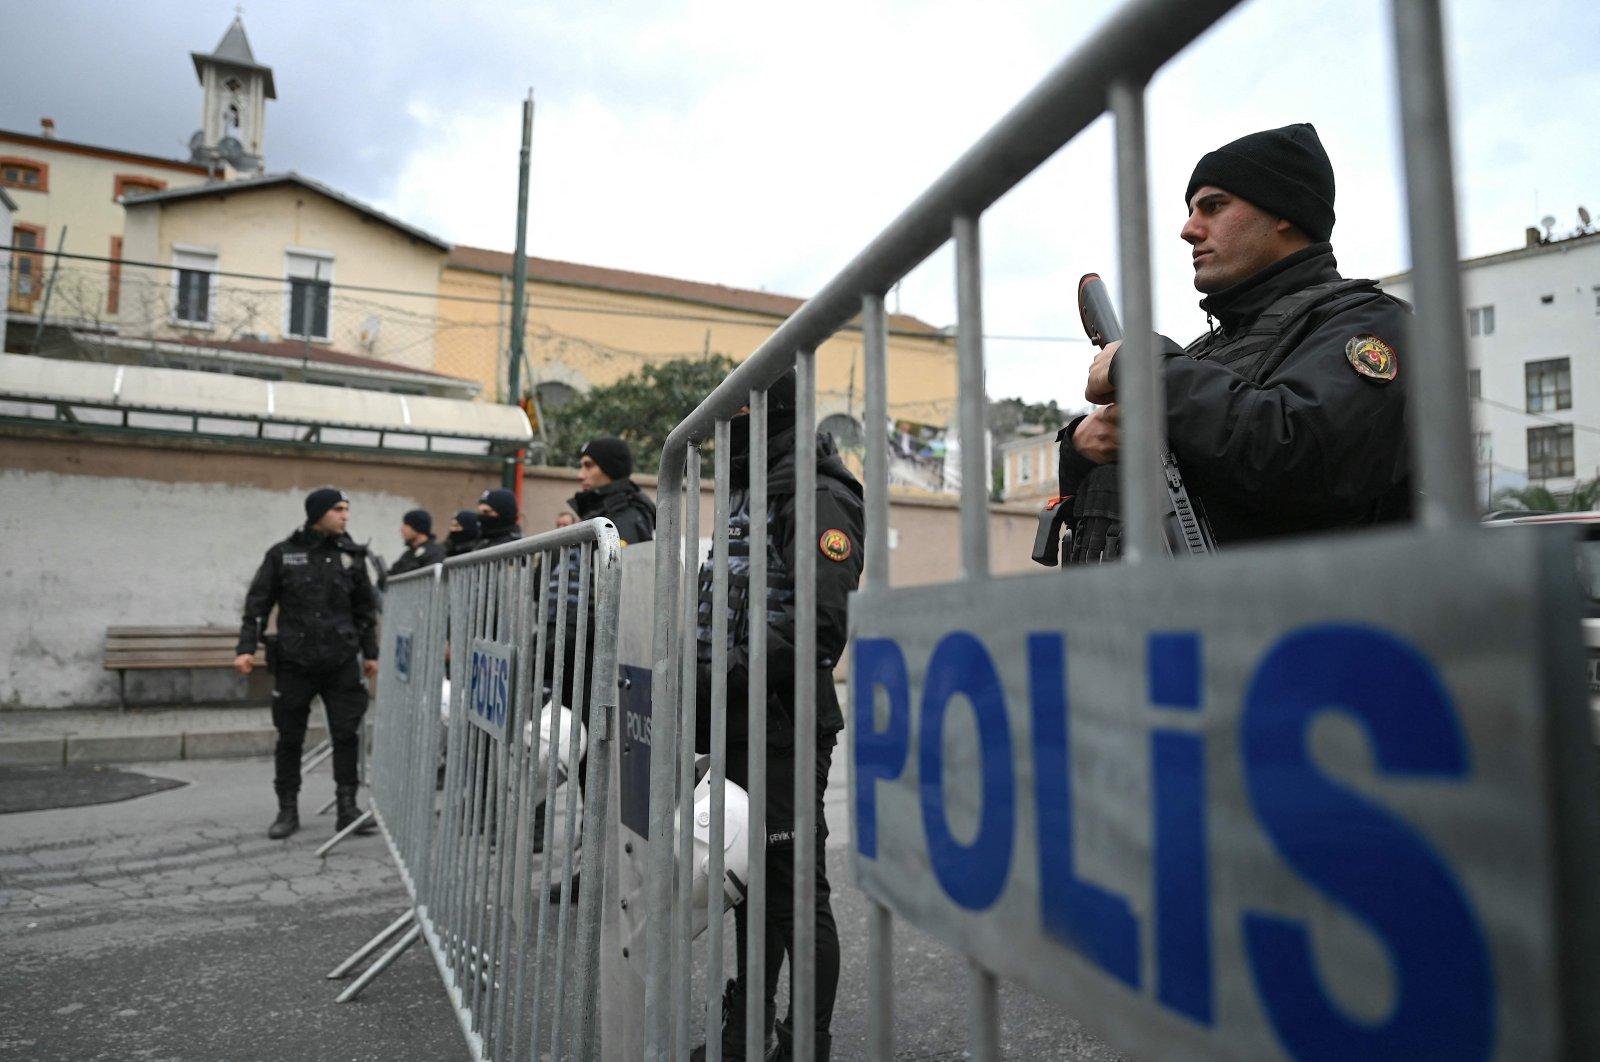 Türkiye detains 2 Daesh-linked suspects after church shooting